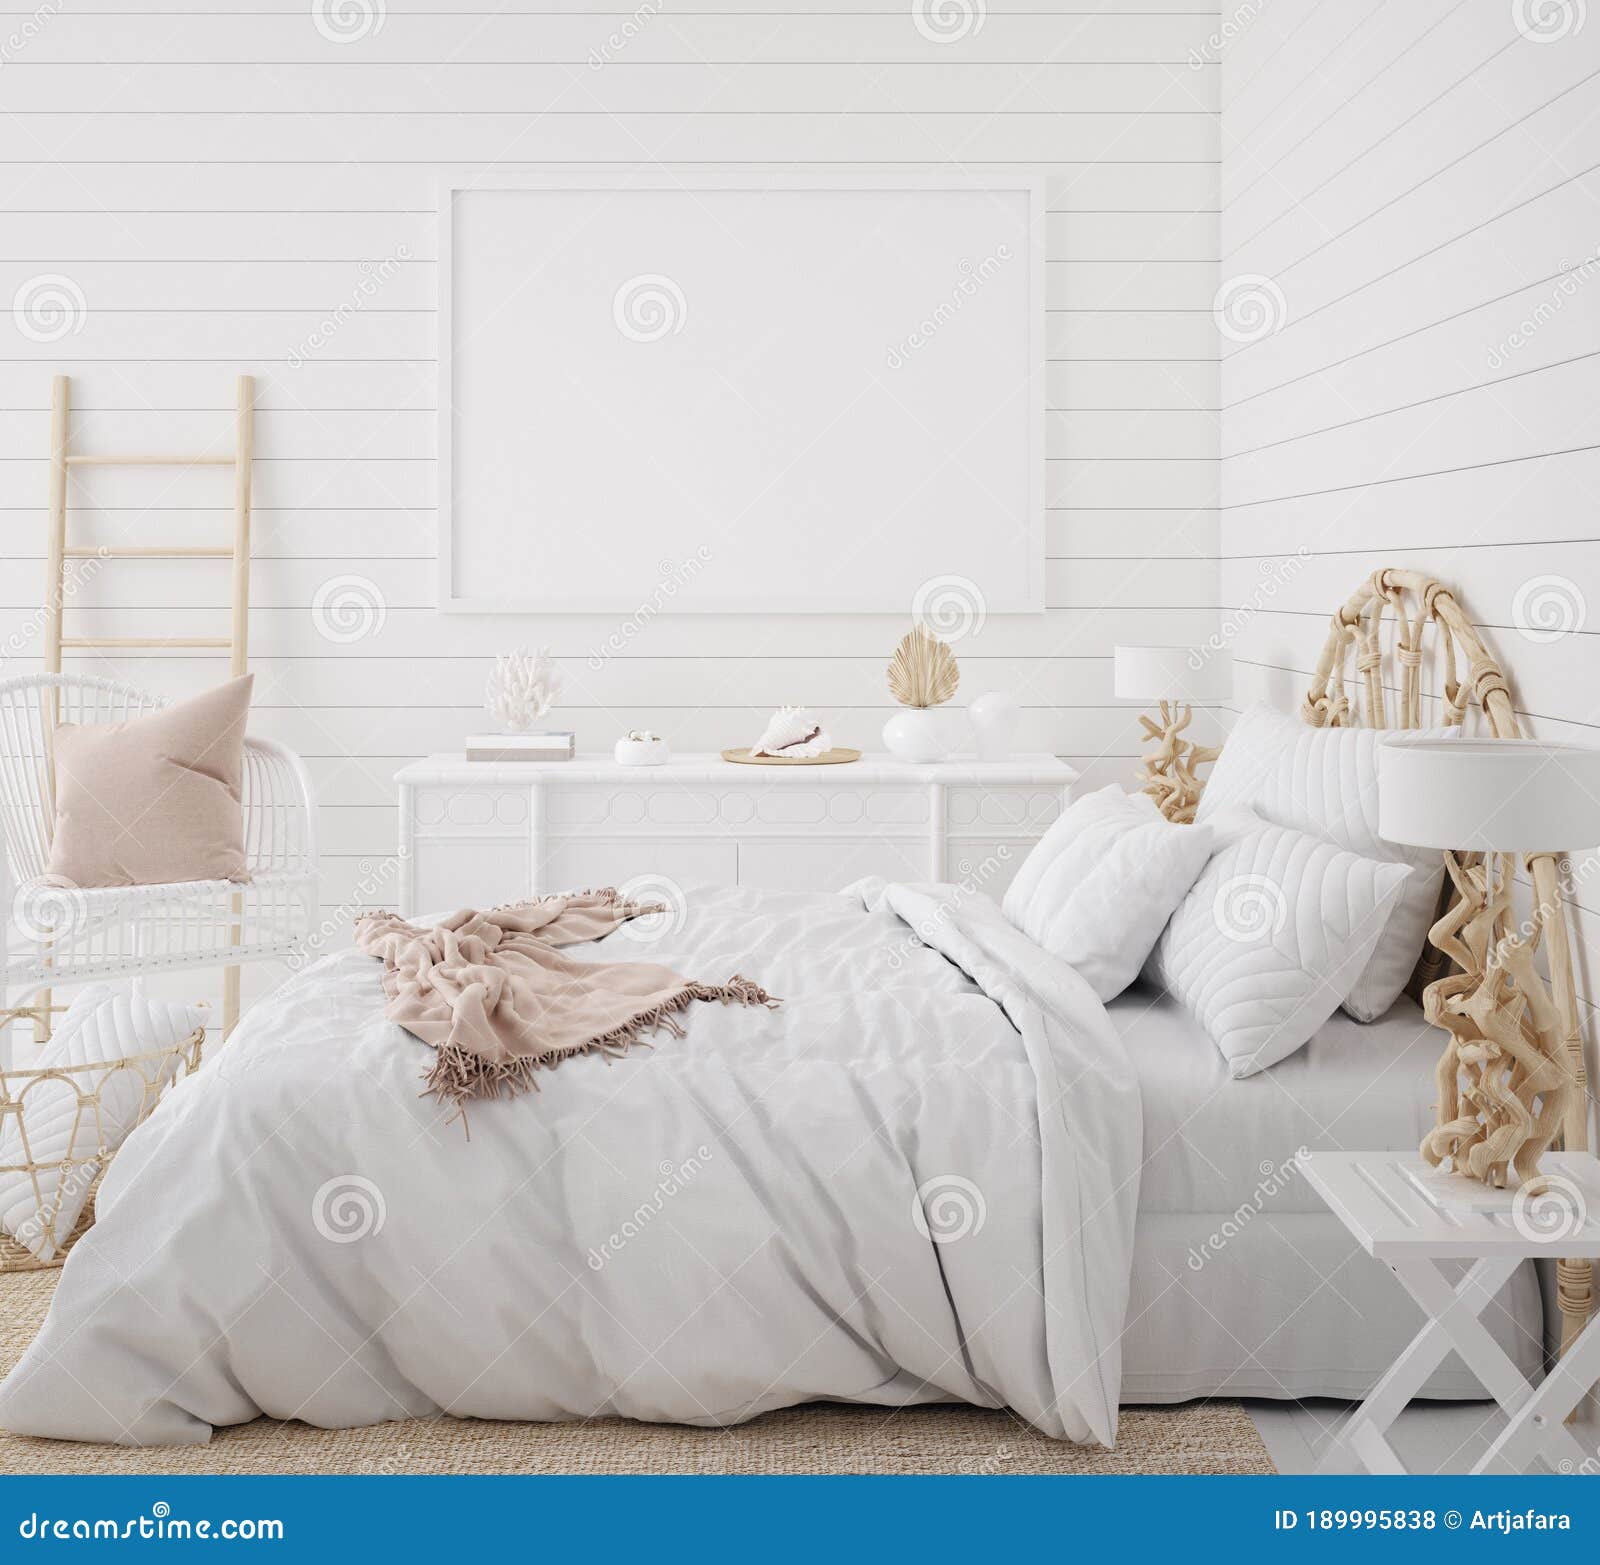 mockup frame in bedroom interior background, coastal boho style